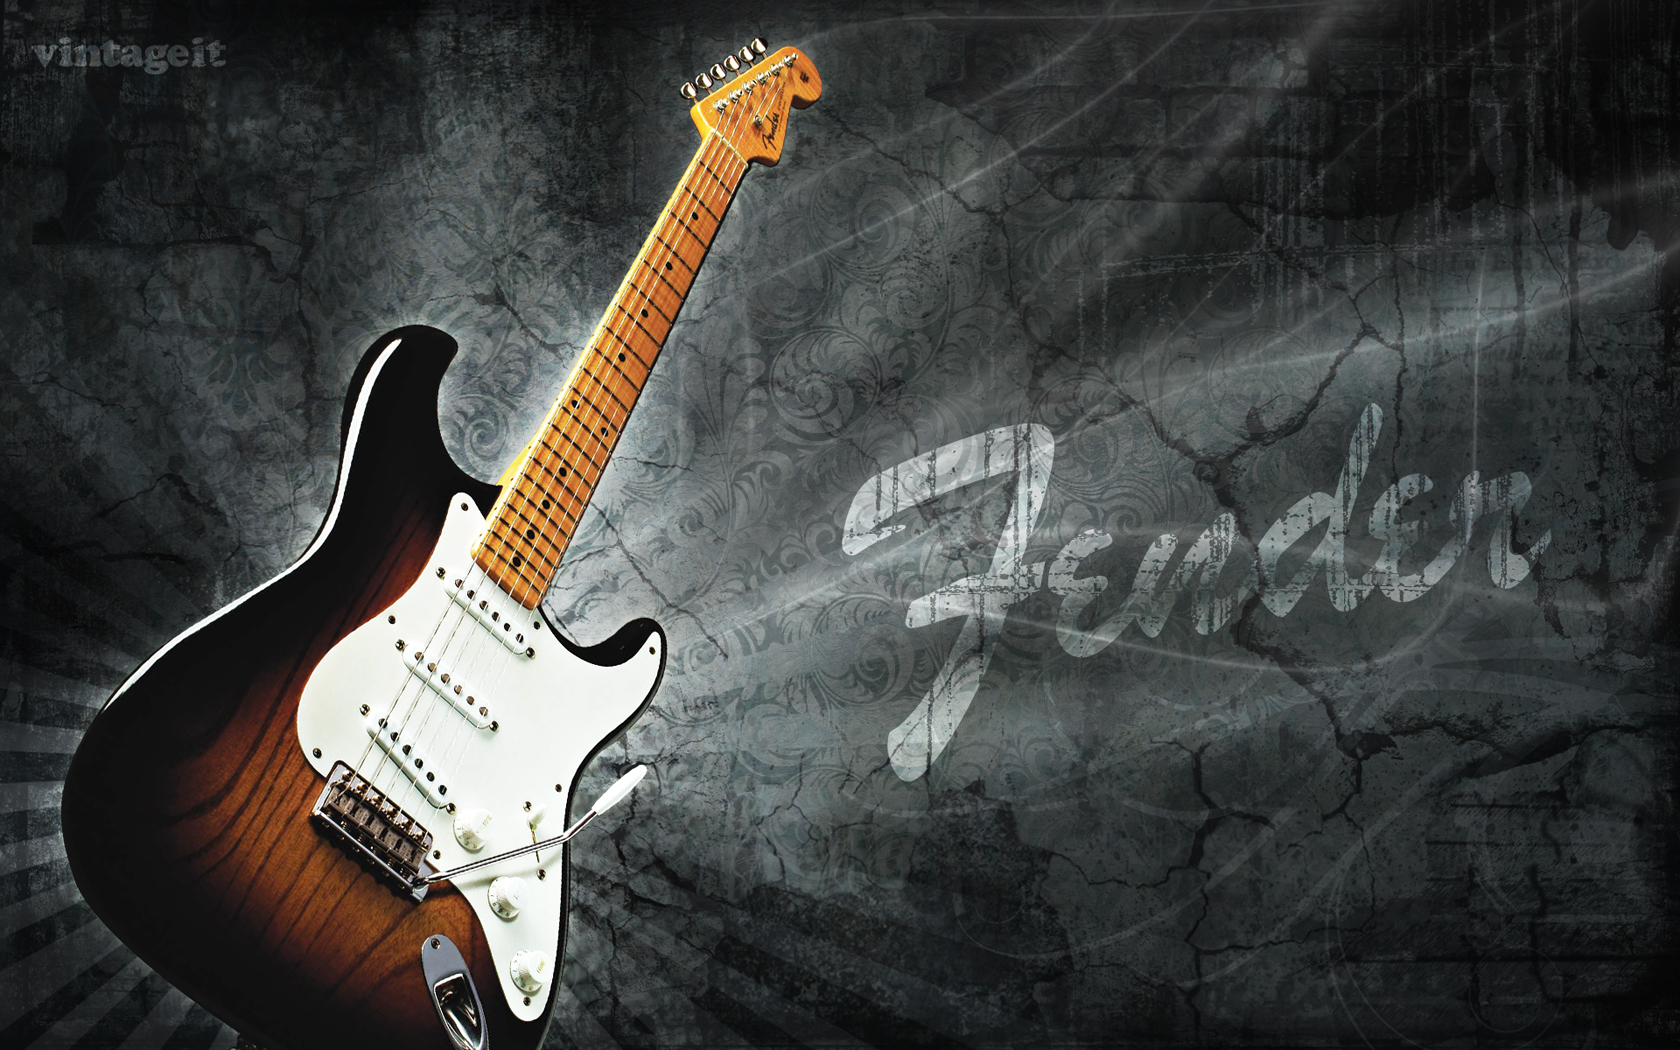 Fender Stratocaster Wallpaper Free Desktop Hd Ipad Iphone Wallpapers